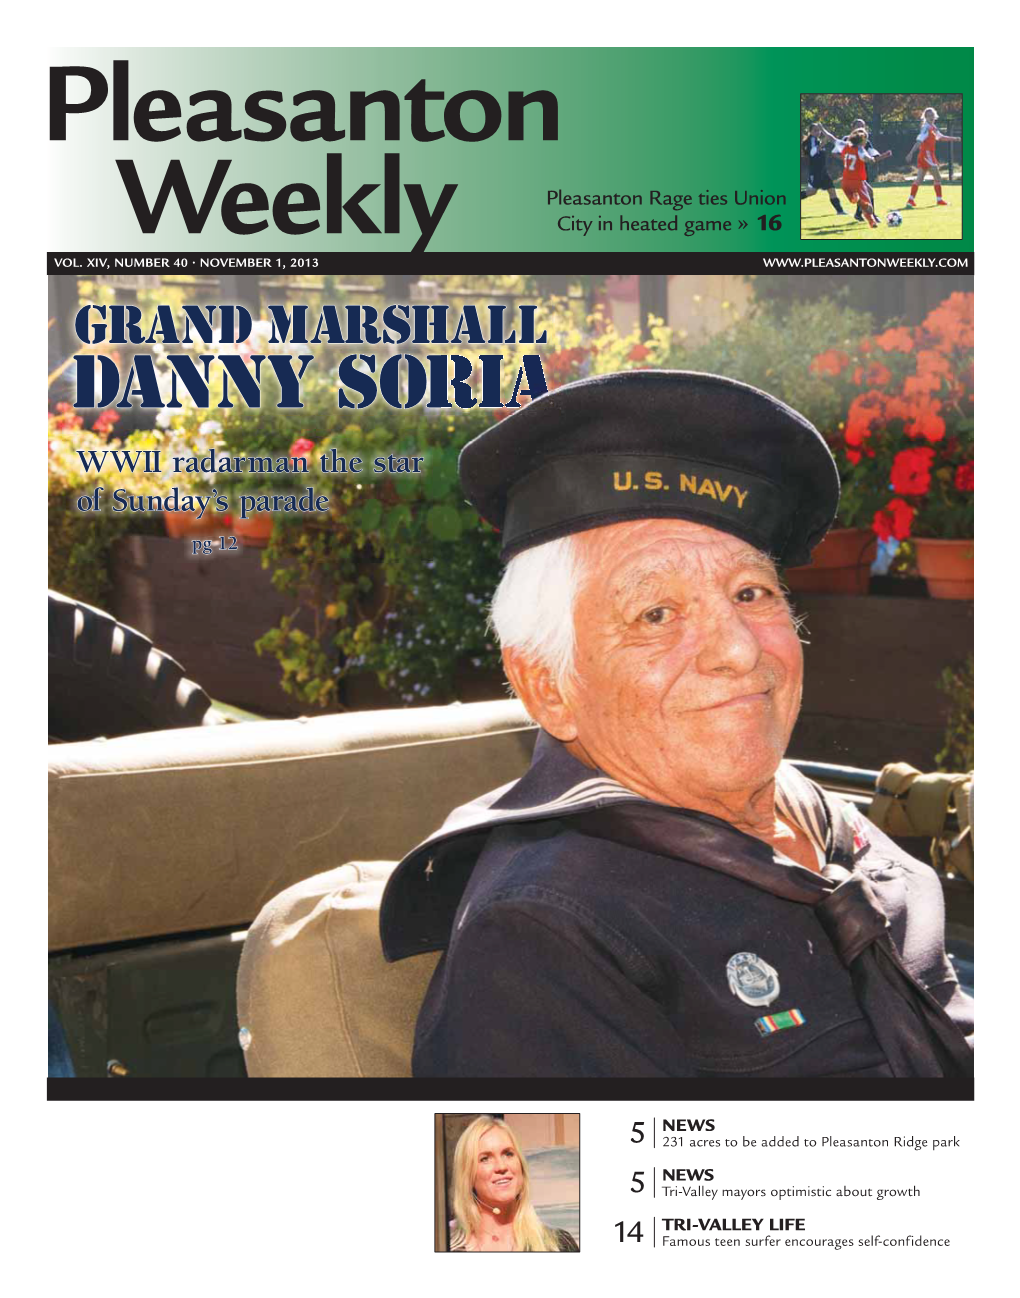 Danny Soria WWII Radarman the Star of Sunday’S Parade Pg 12